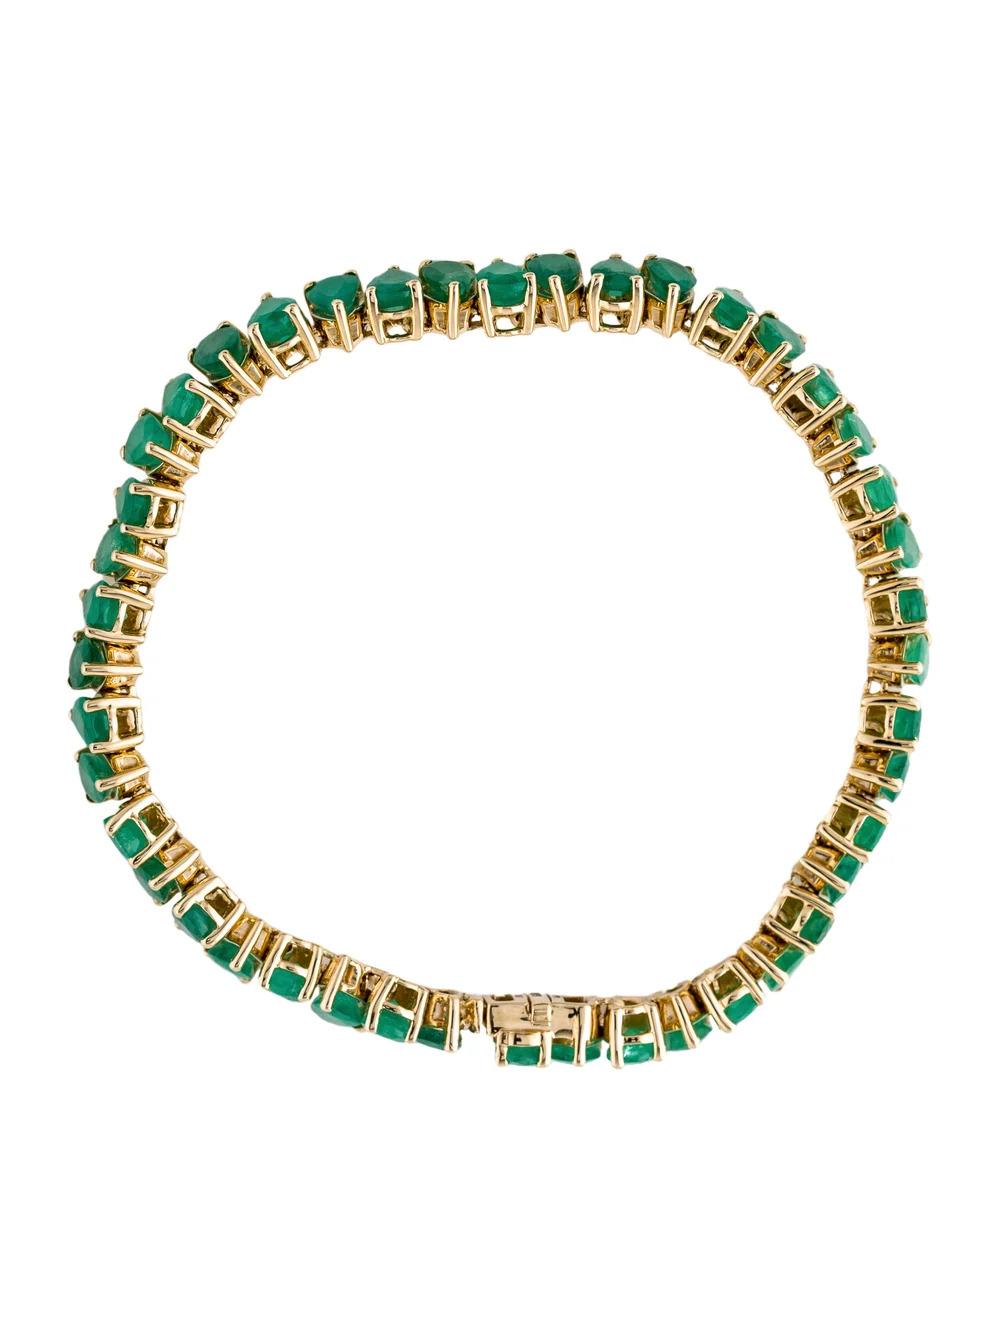 Vintage 14K Emerald Bracelet - 15.10ctw, Green Gemstone, Elegant Design, Luxury In New Condition For Sale In Holtsville, NY